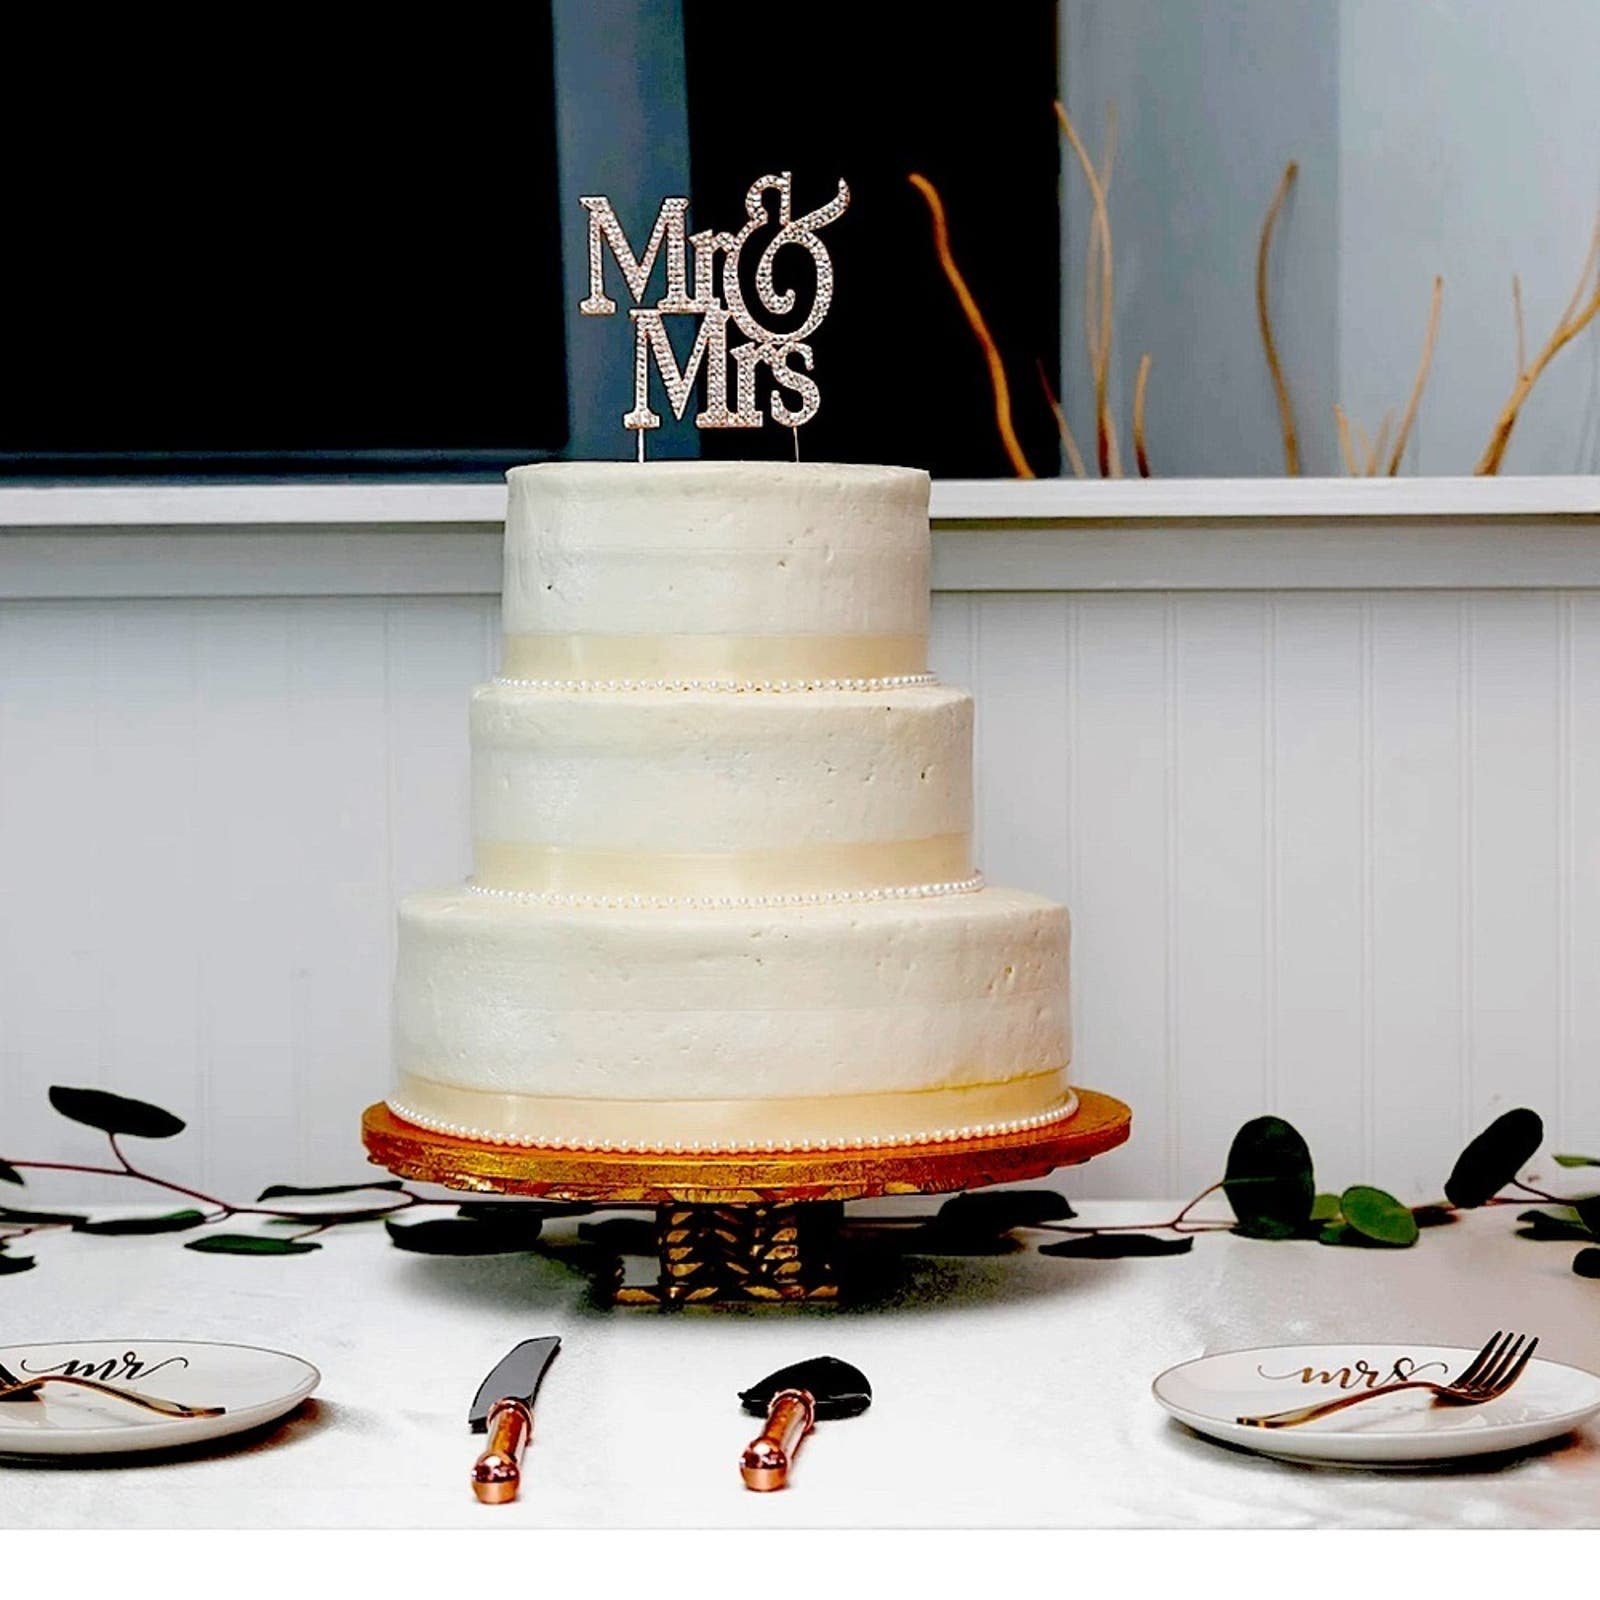 Rhinestone Mr & Mrs Wedding Cake Topper QbjScA8C0